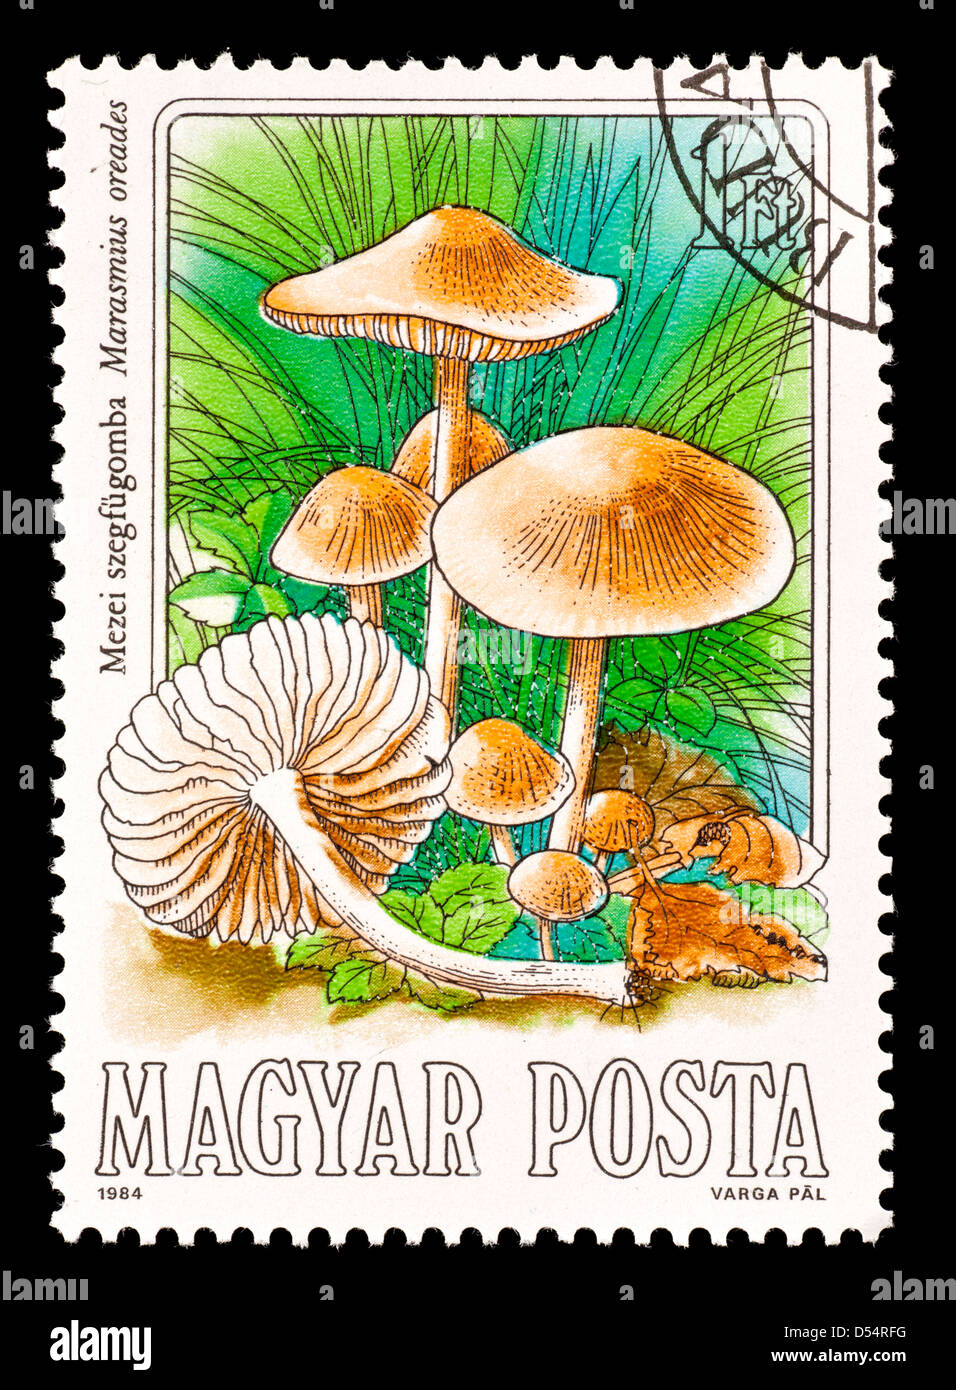 Postage stamp from Hungary depicting a fairy ring or Scotch bonnet mushroom (Marasmius oreades) Stock Photo